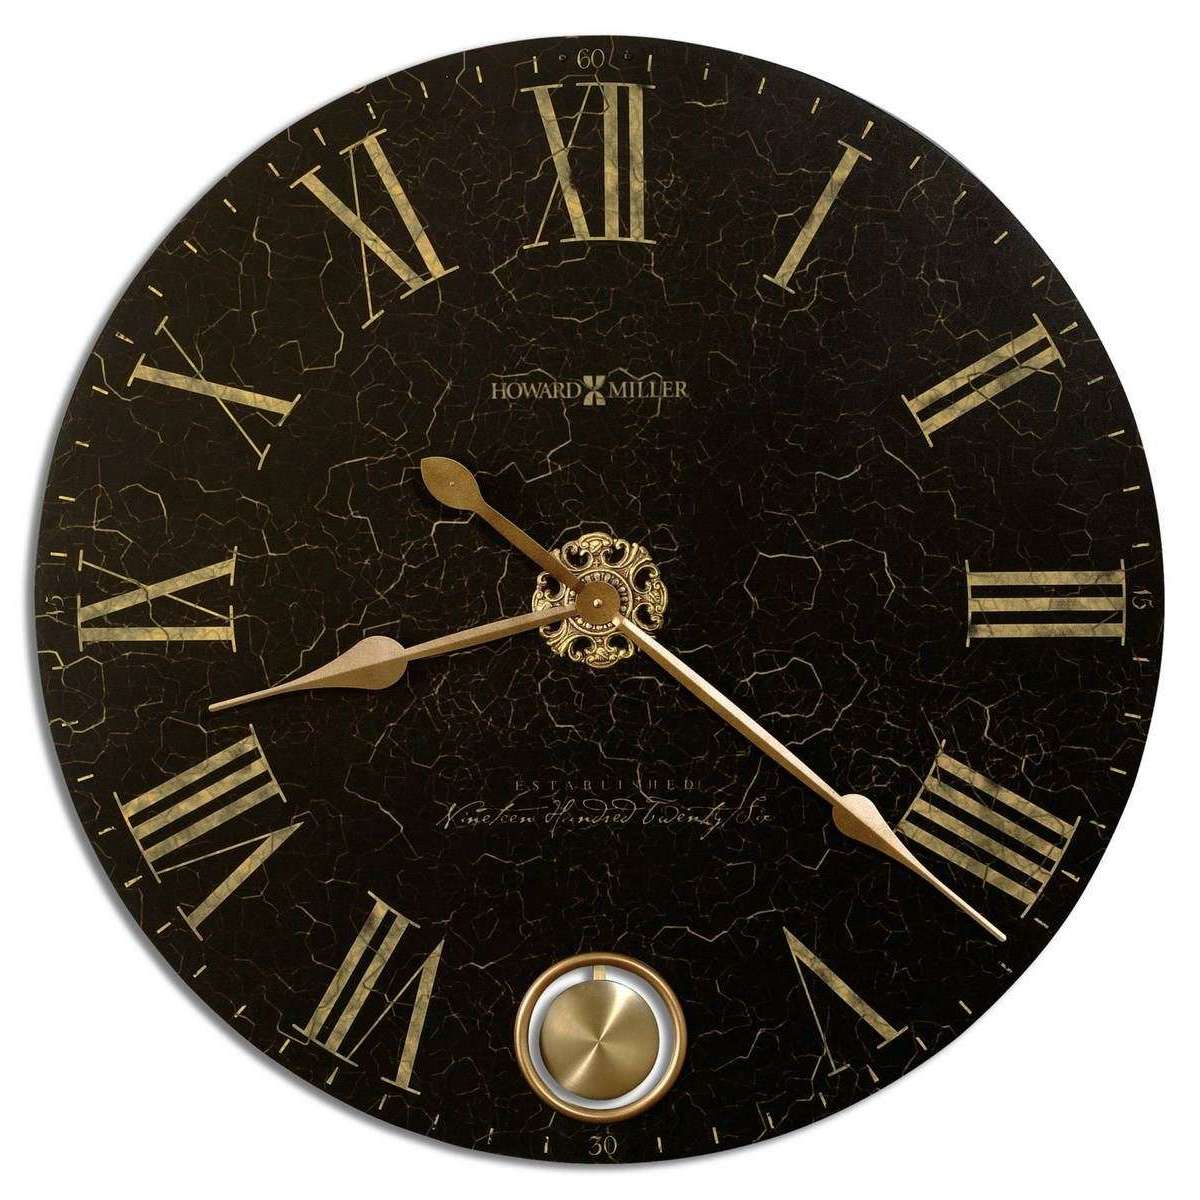 Howard Miller London Night Wall Clock - Black